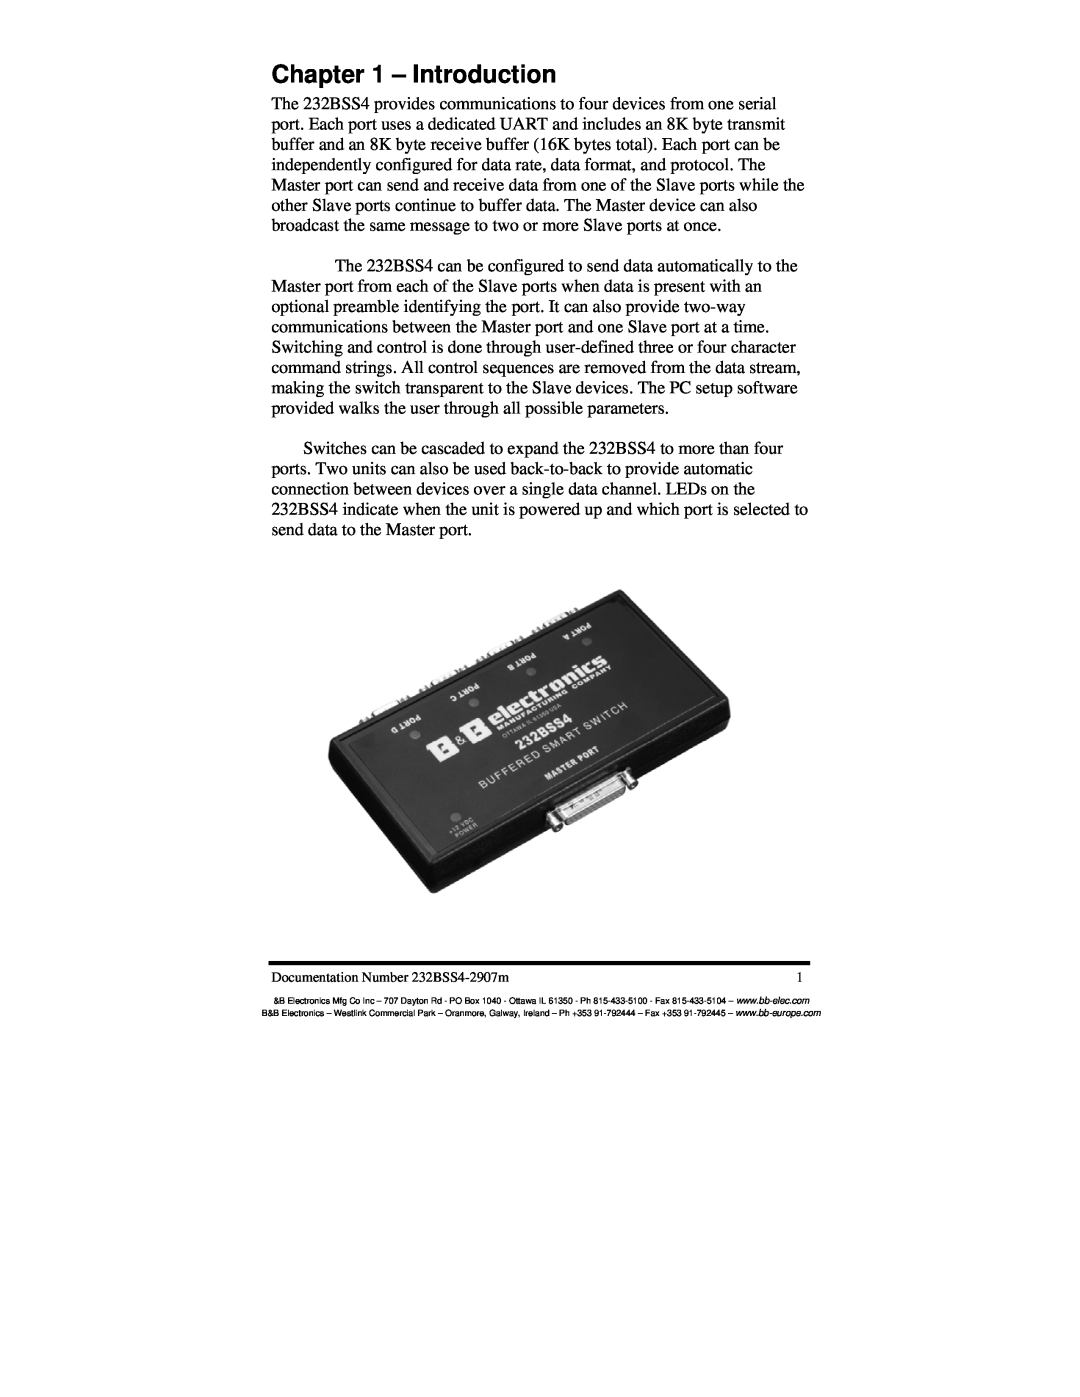 B&B Electronics Buffered Smart Switch manual Introduction, Documentation Number 232BSS4-2907m 